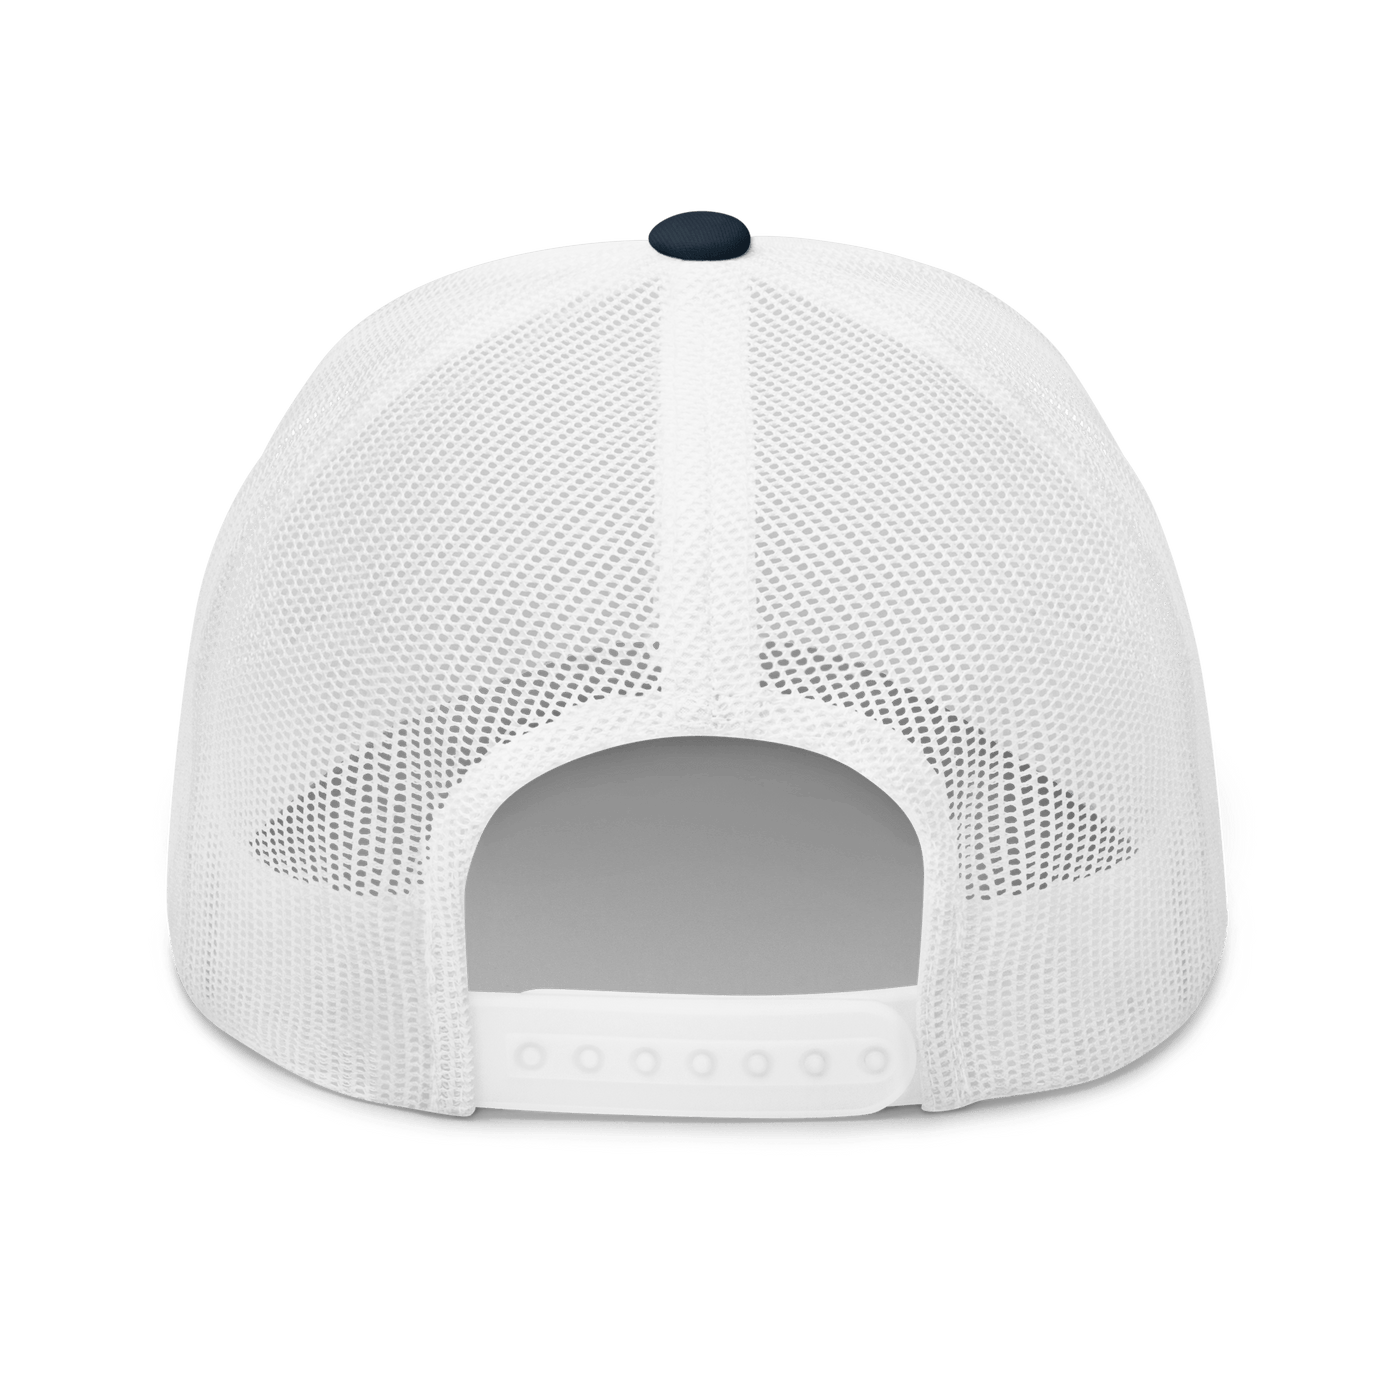 UFO Trucker Cap - Navy/ White - - Just Another Cap Store